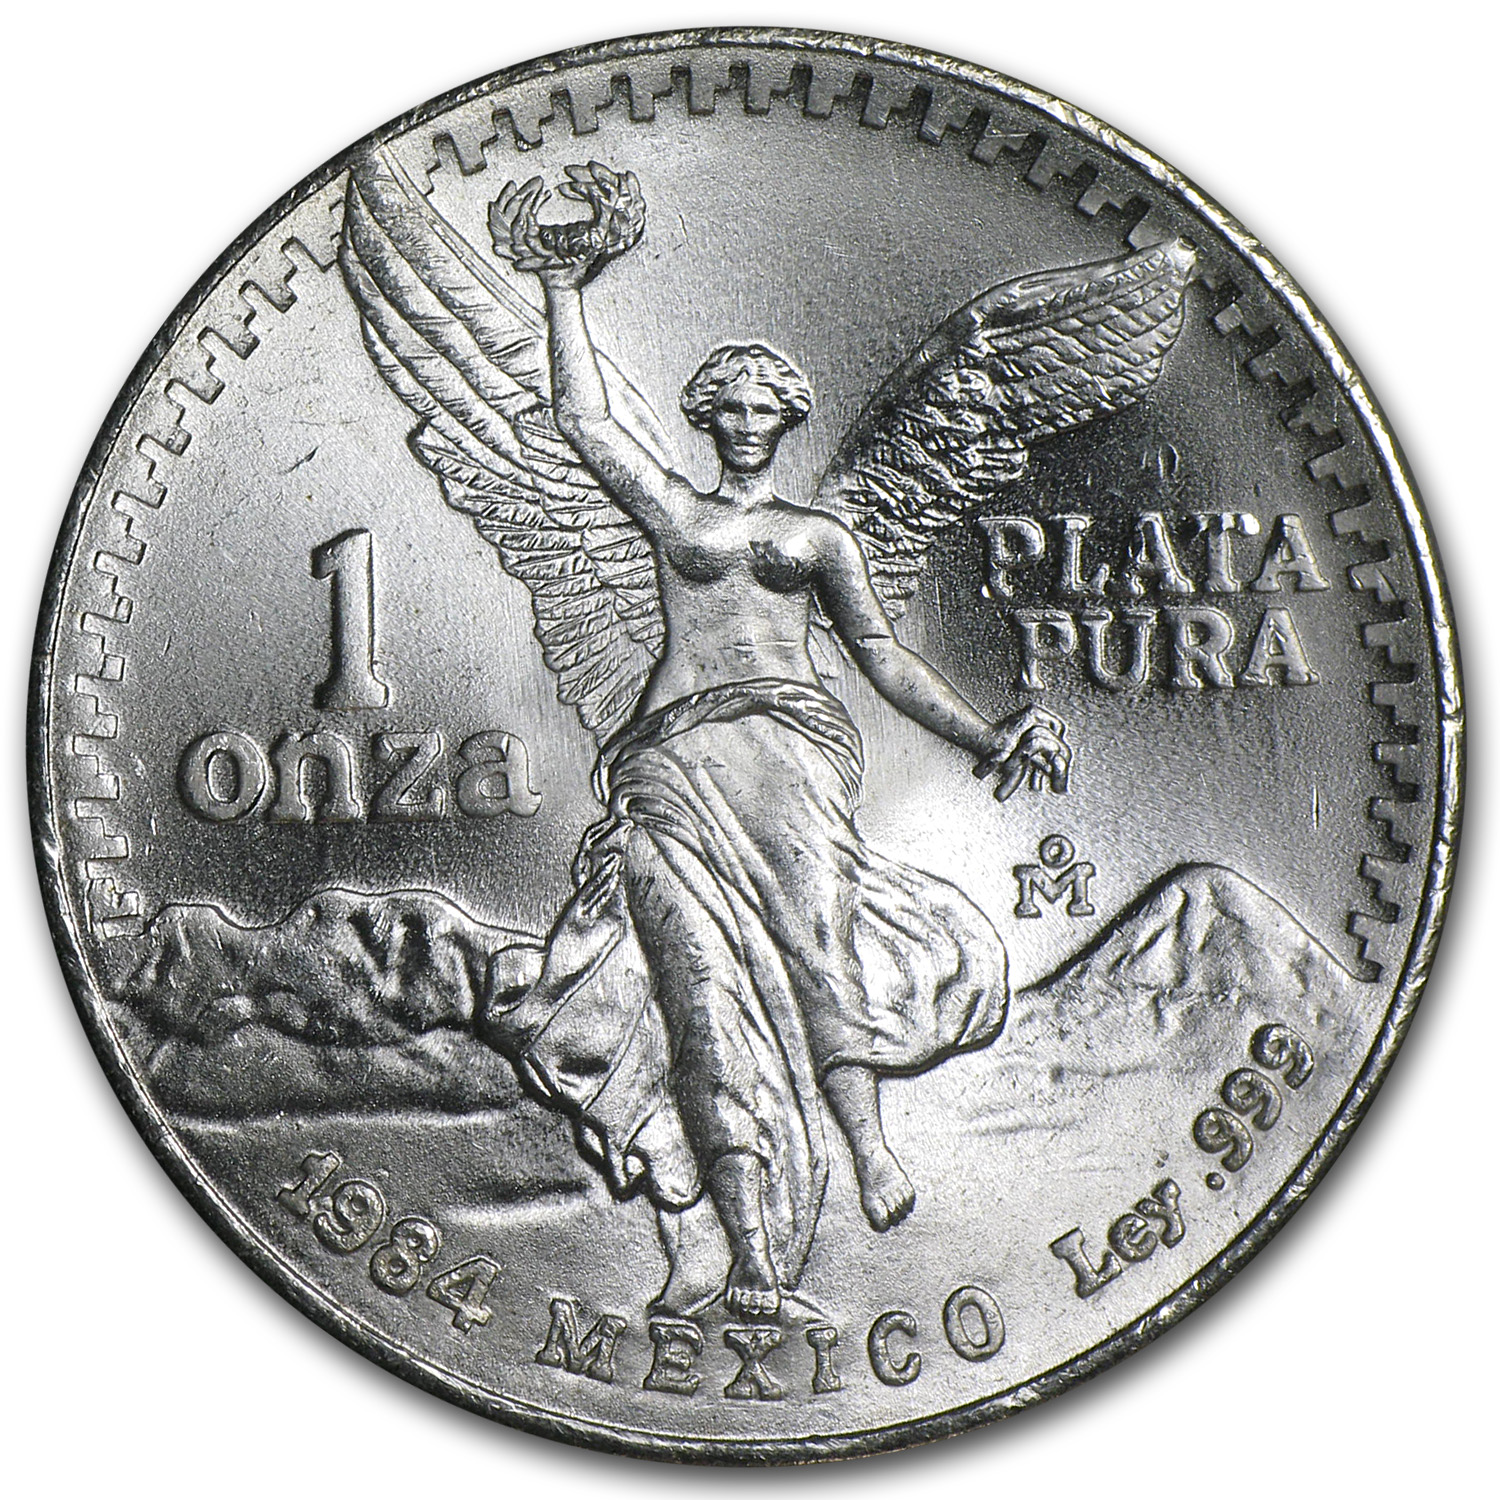 Buy 1984 Mexico 1 oz Silver Libertad BU